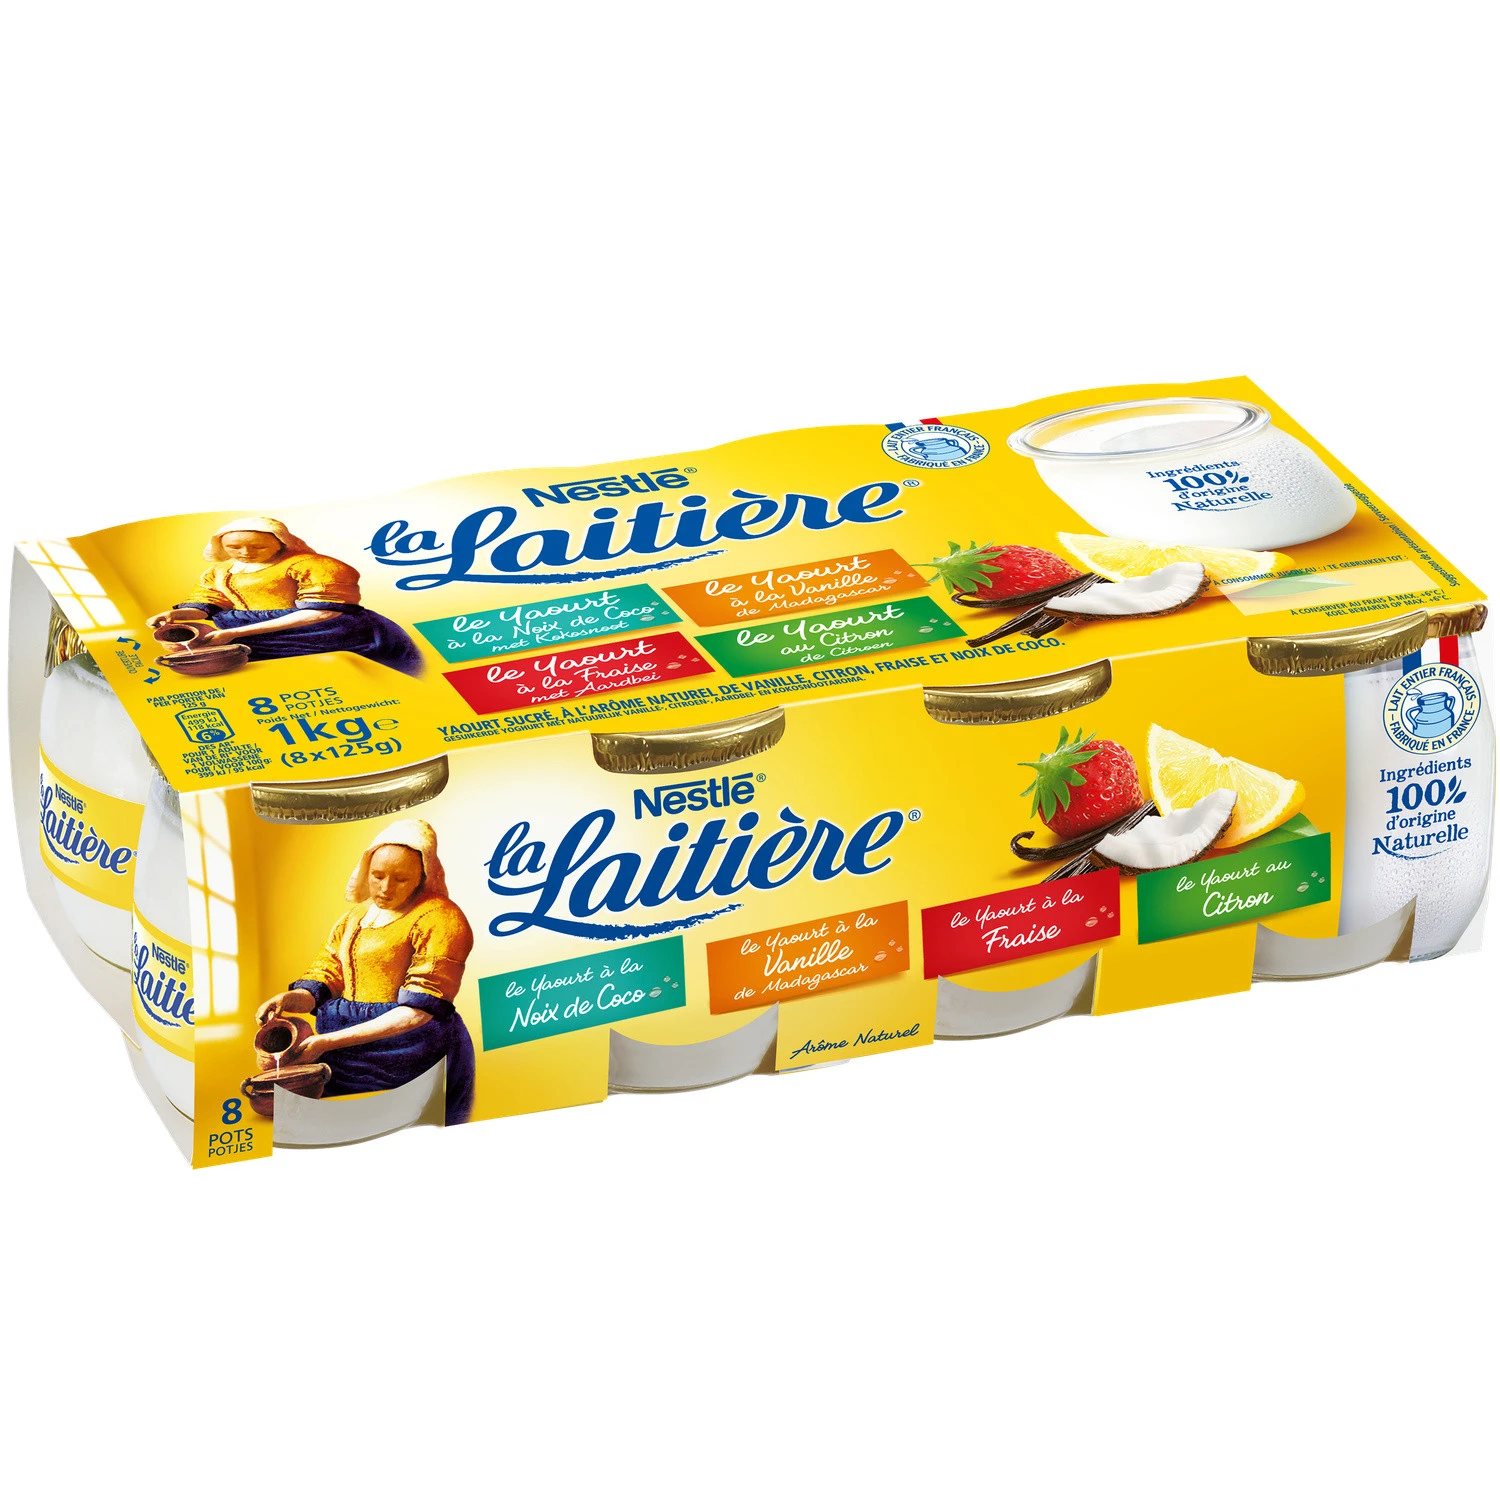 La Laitiere yogurts mixed flavors 8x125g